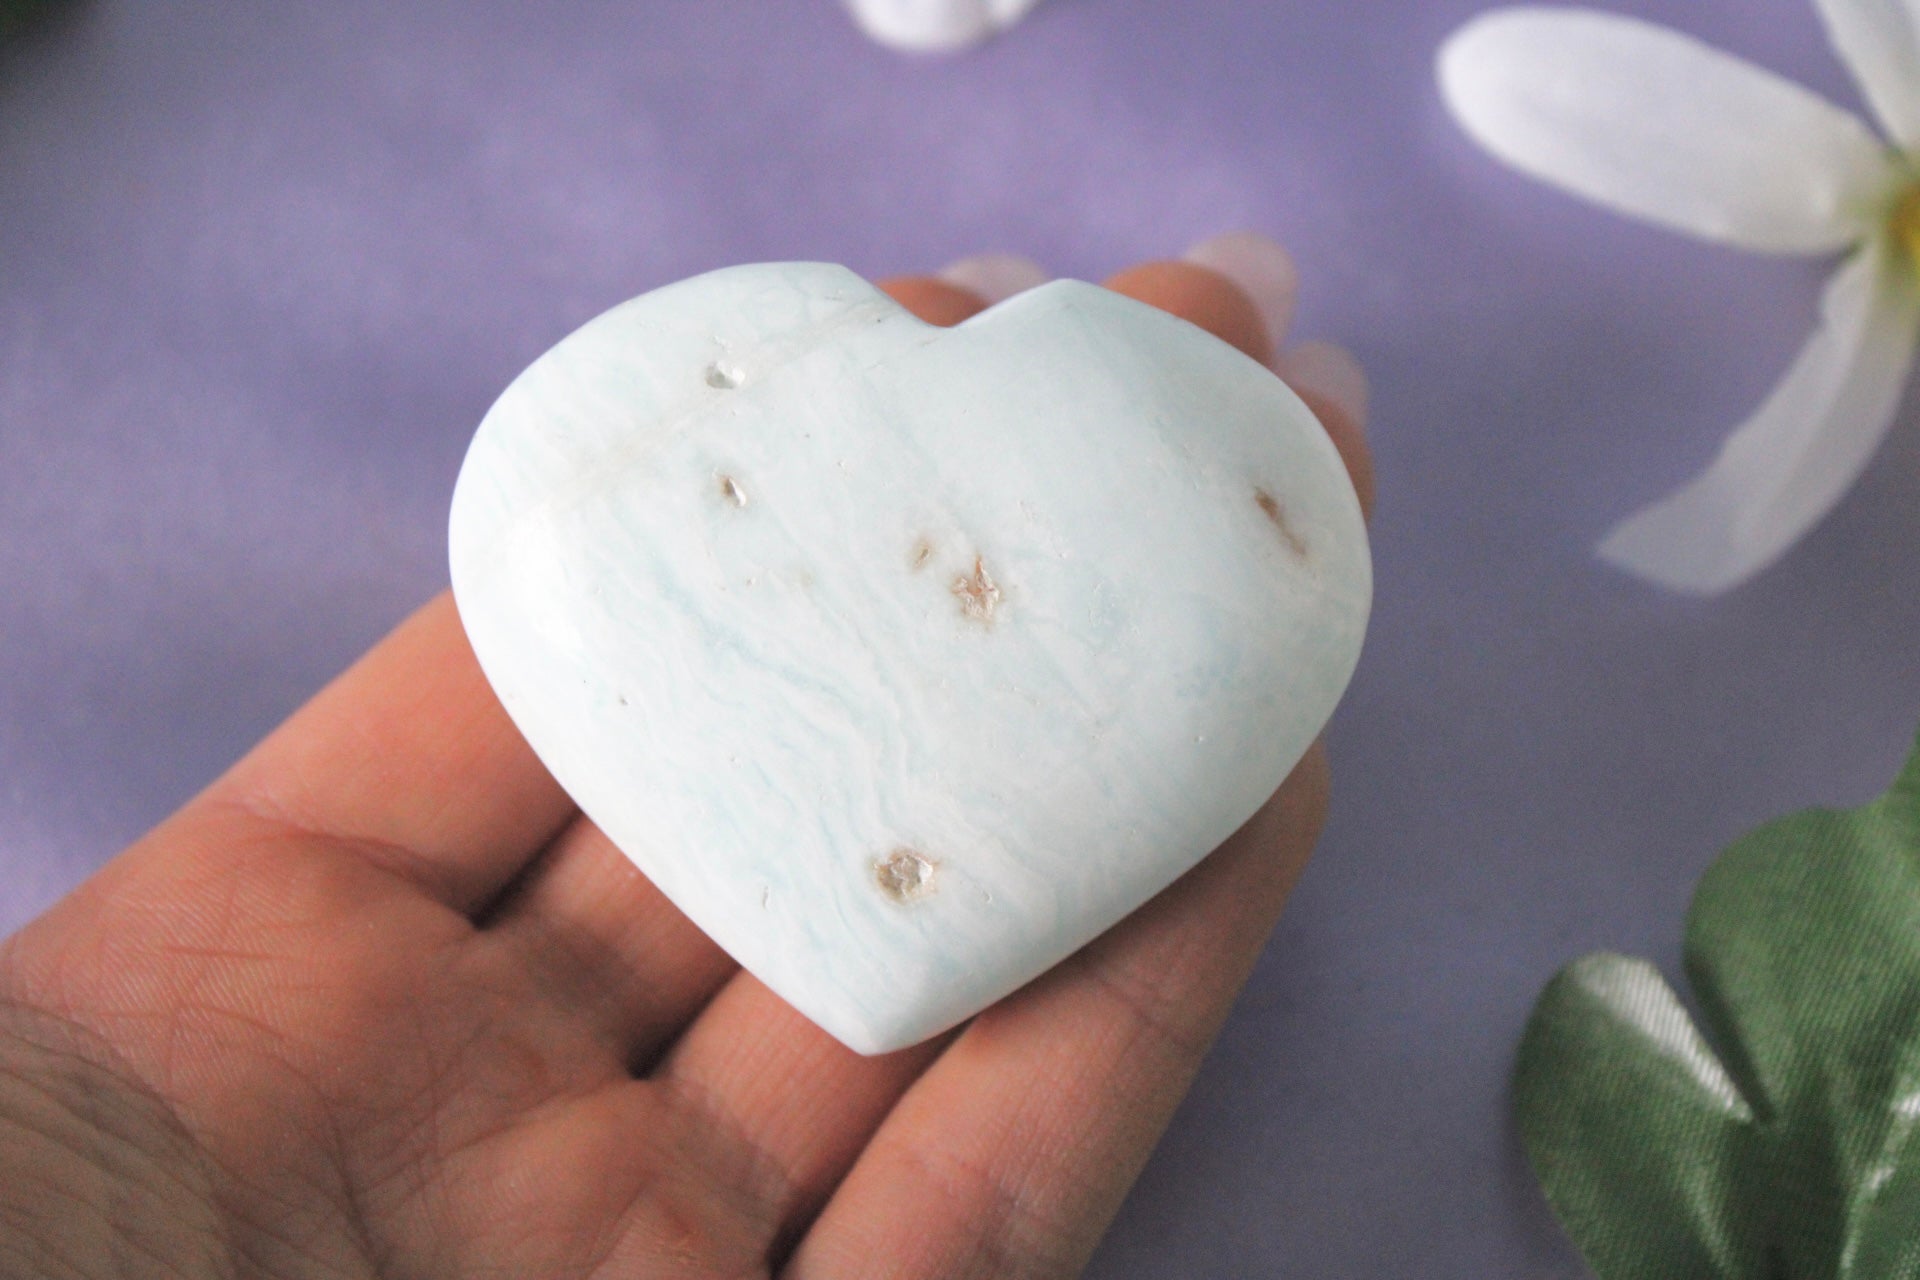 Pistachio/Caribbean green/blue Calcite Crystal Heart